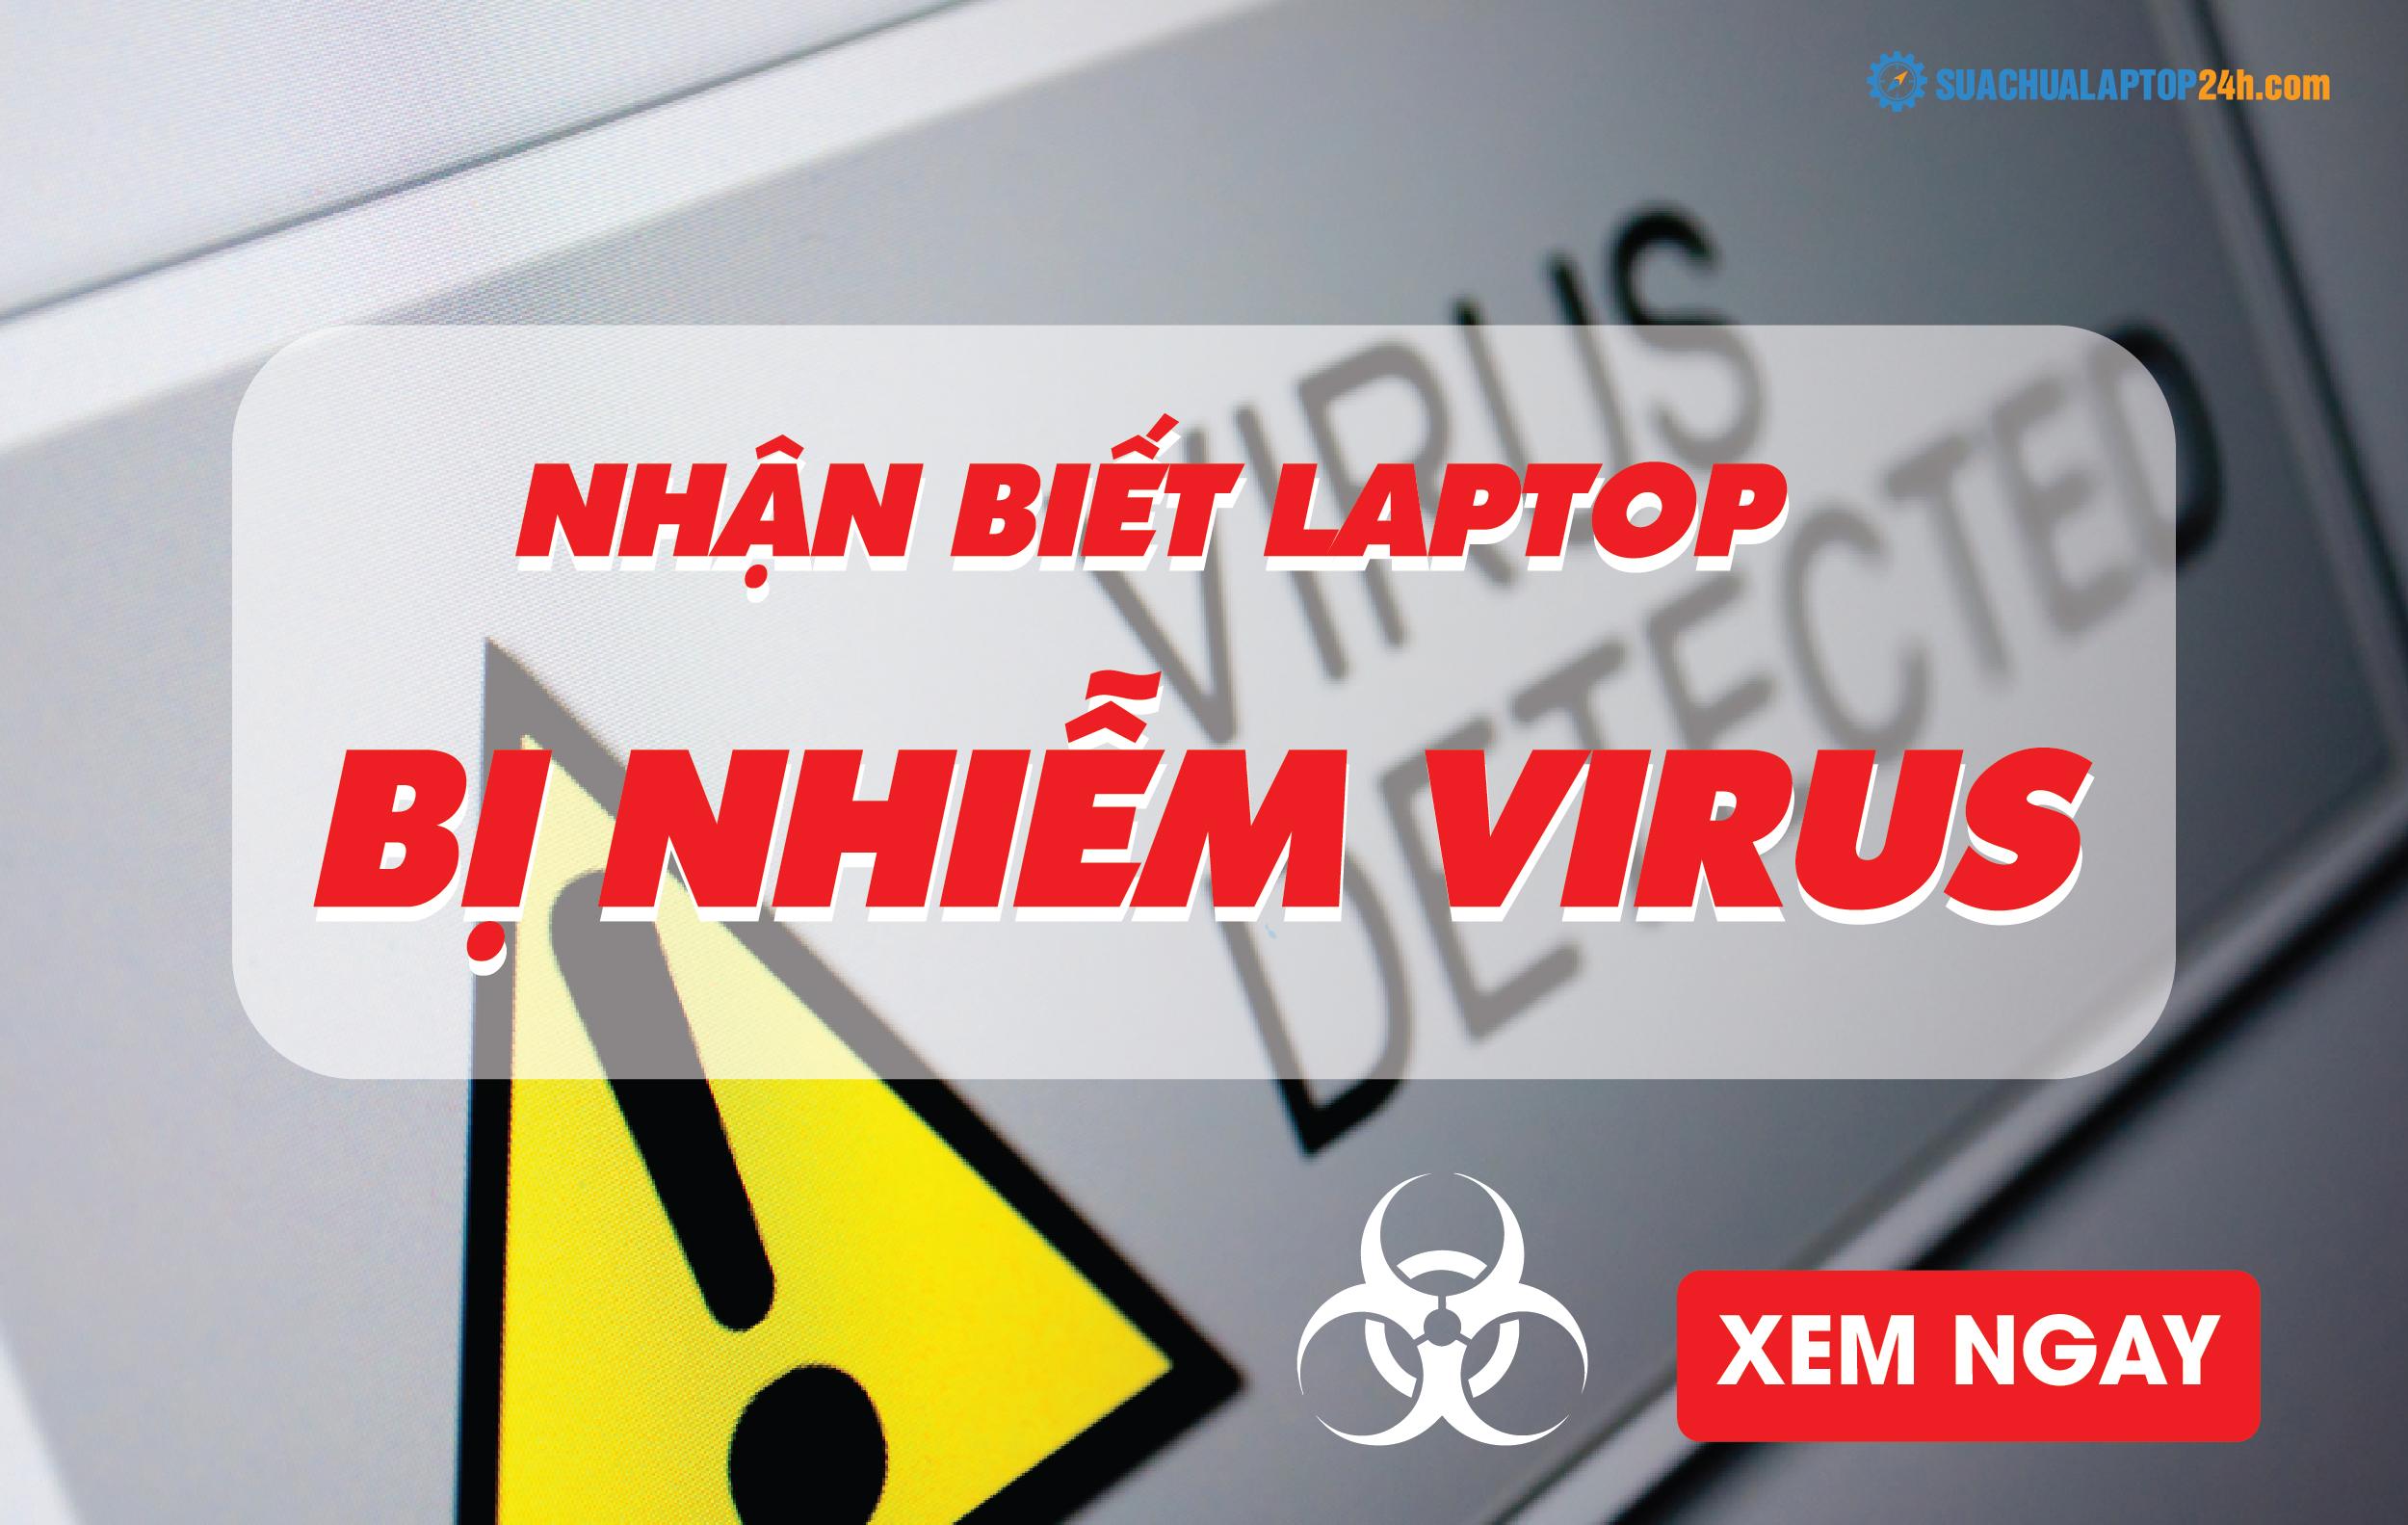 nhận biết laptop bị nhiễm virus